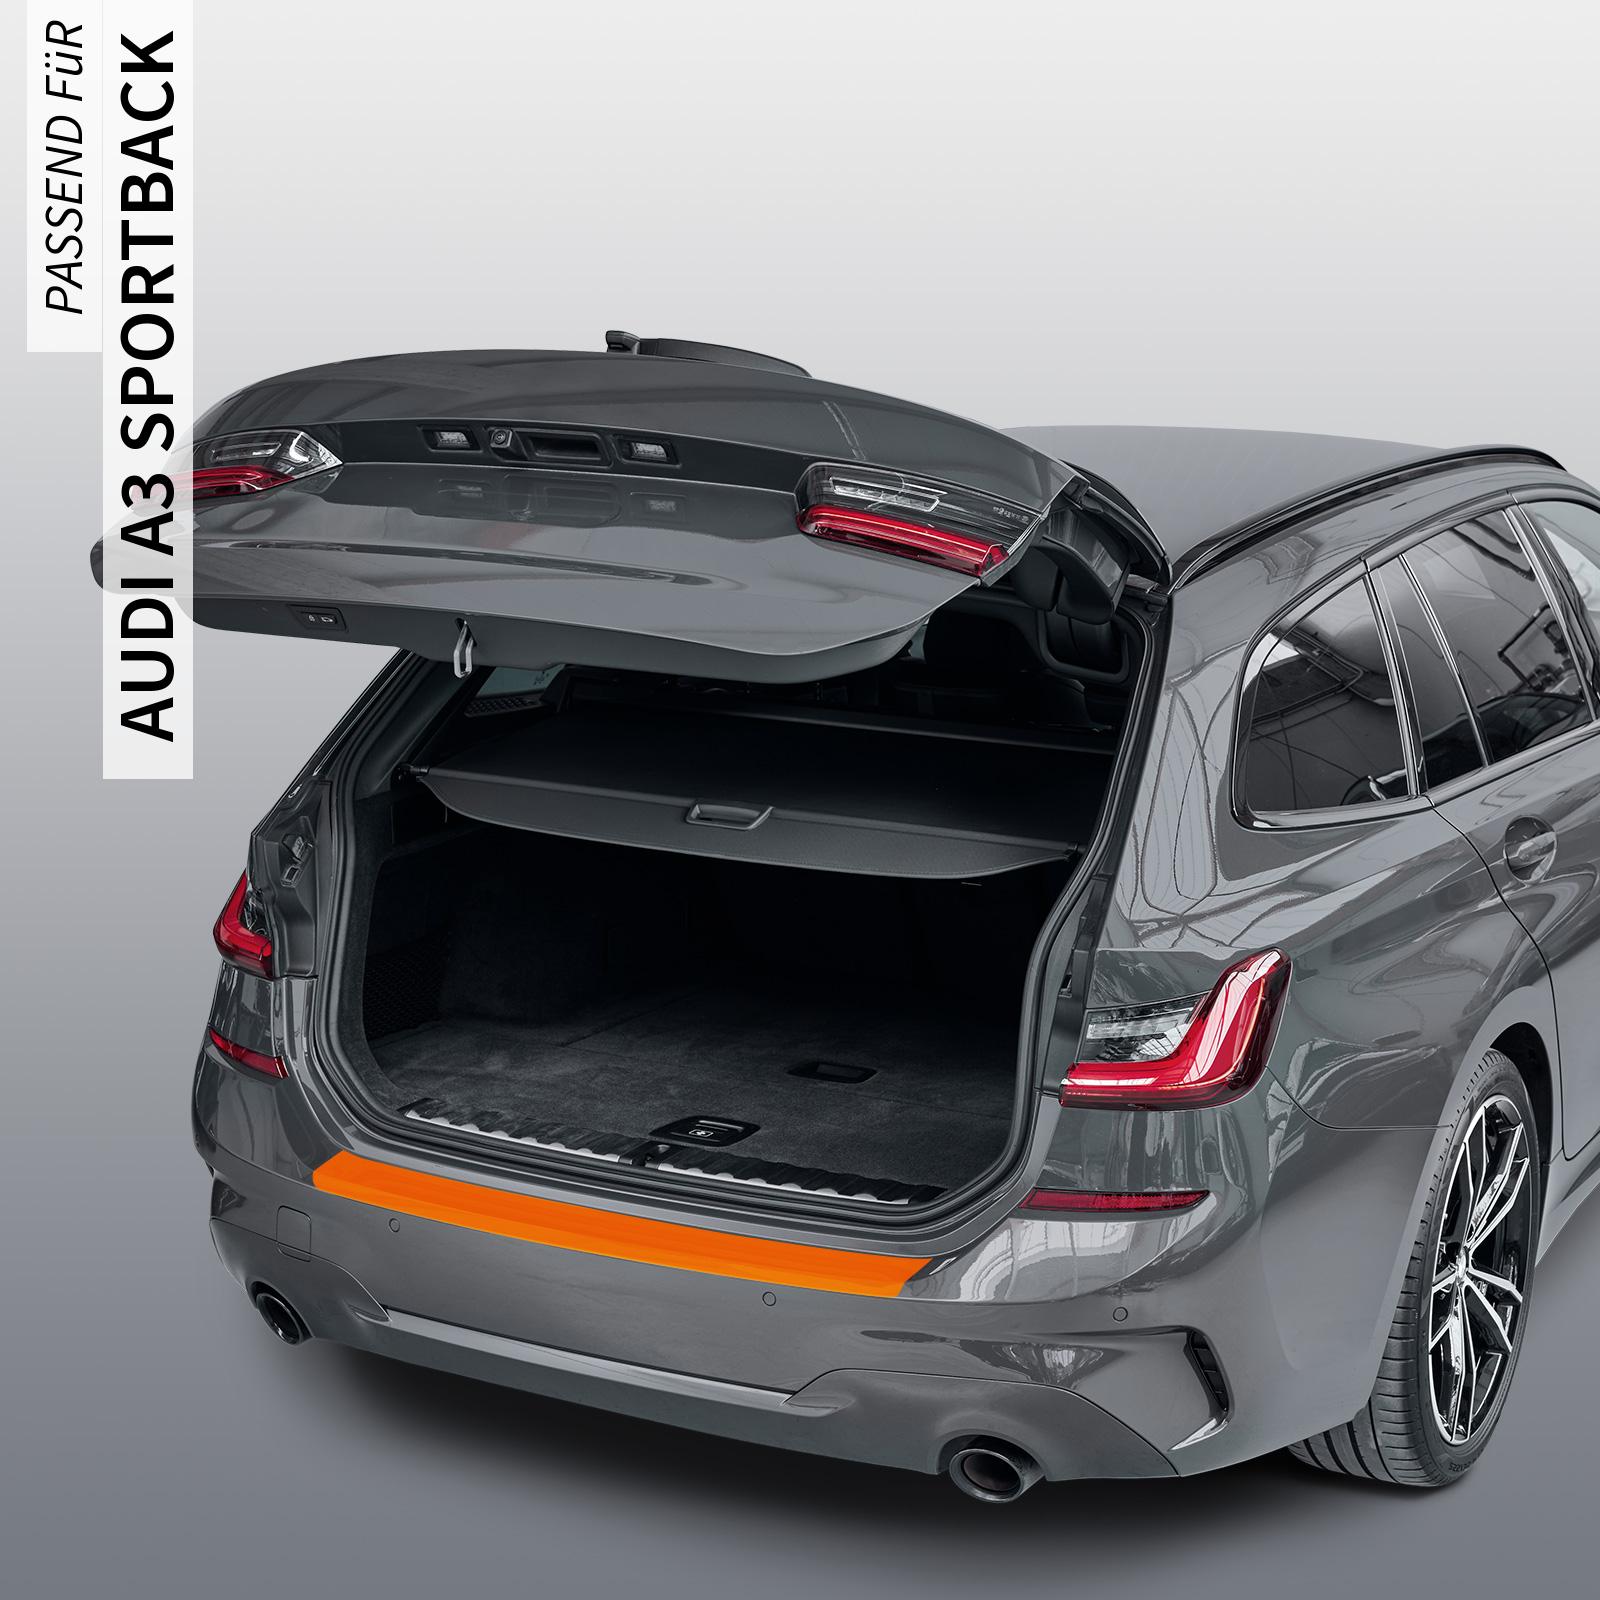 Ladekantenschutzfolie - Transparent Glatt MATT 110 µm stark  für Audi A3 Sportback Typ 8Y, ab BJ 07/2020